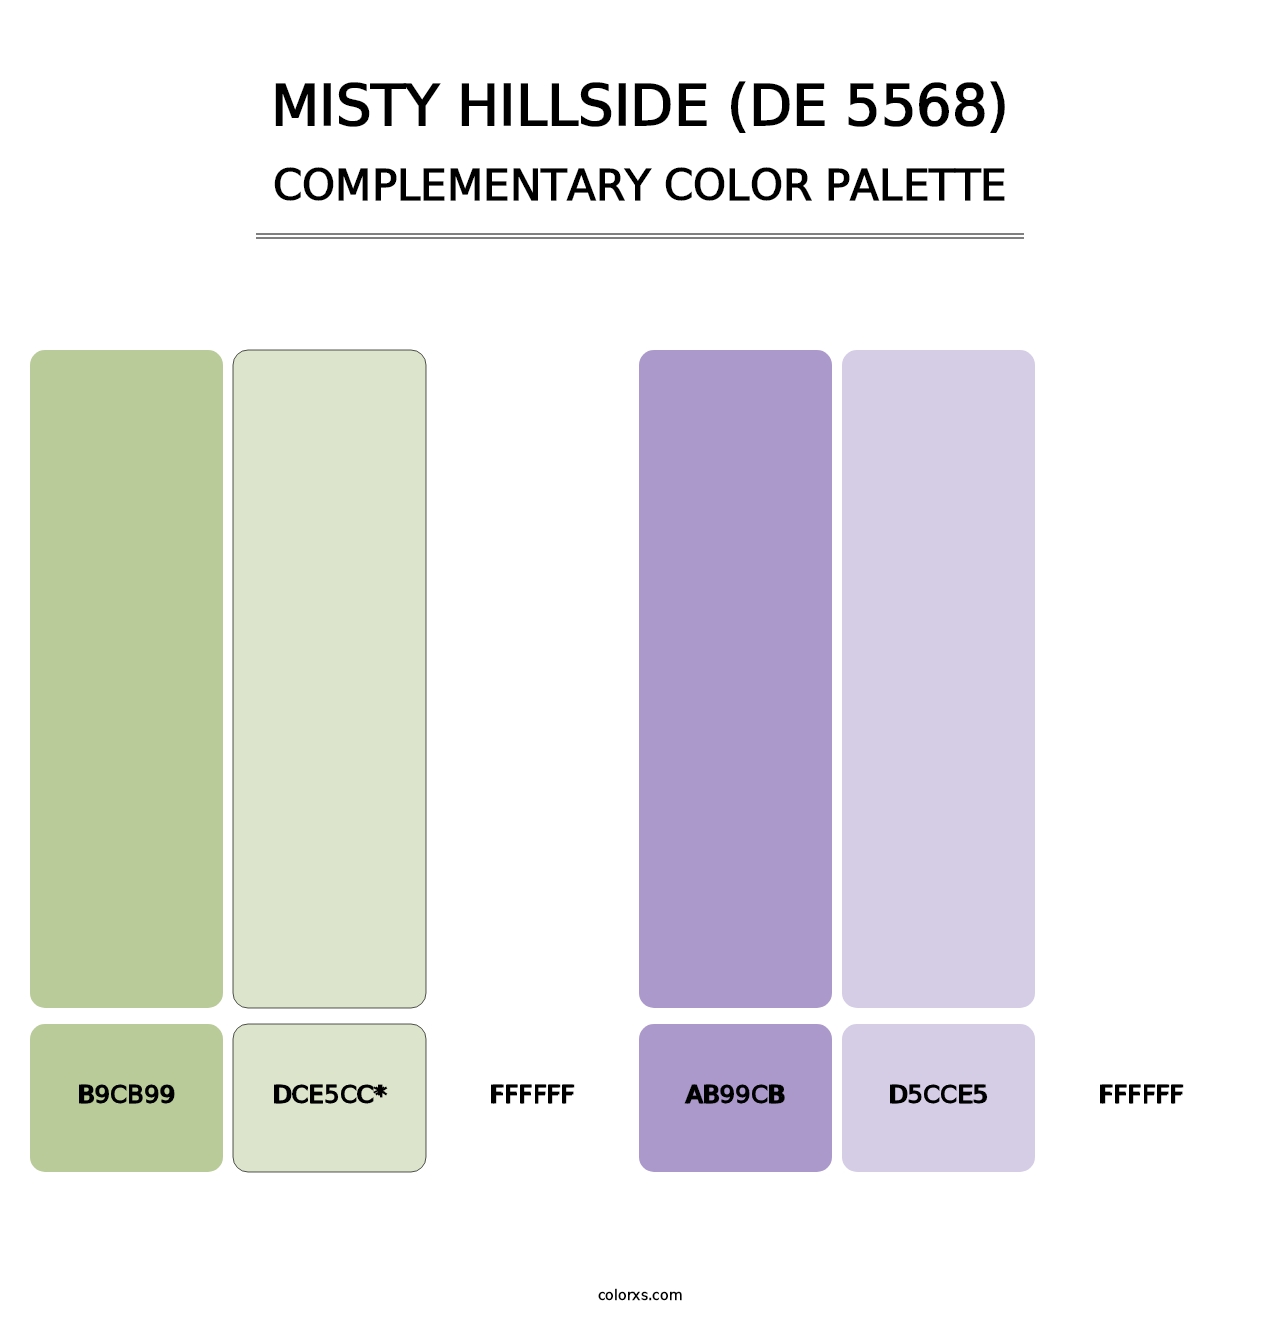 Misty Hillside (DE 5568) - Complementary Color Palette